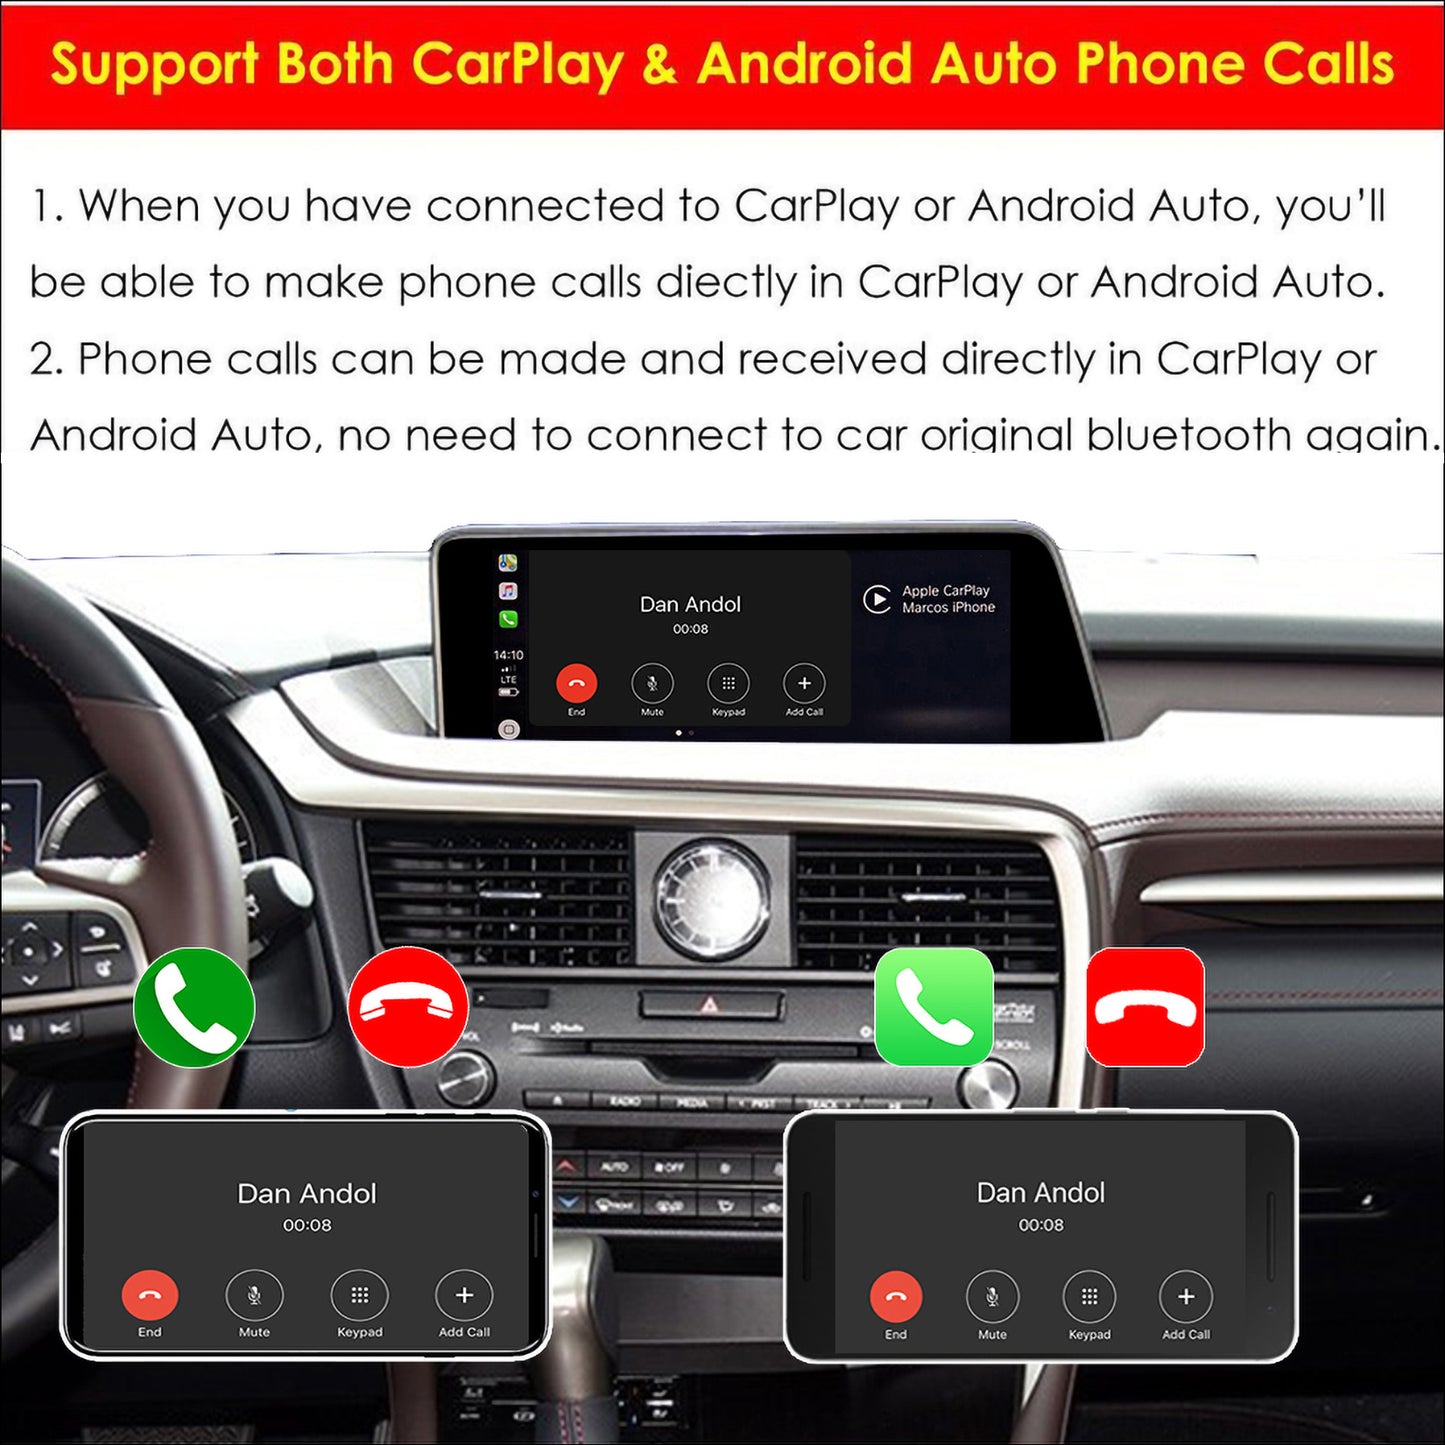 CarProKit Wireless CarPlay + Android Auto + Mirroring Retrofit Module Kits for Lexus ES IS GS LS NX RX LX UX GX RC LC CT 2014-2019